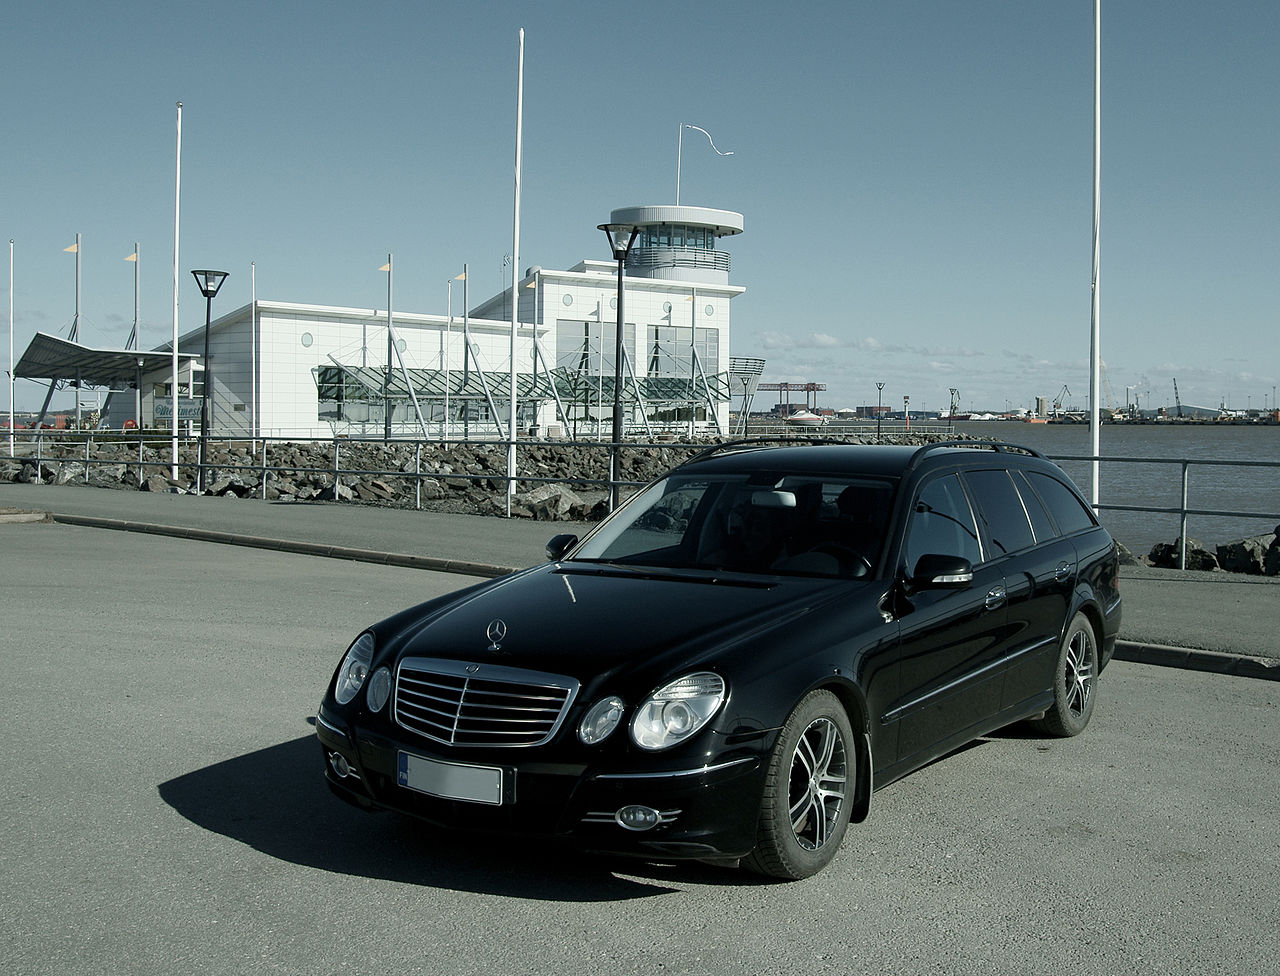 File:Mercedes-Benz W211.jpg - Wikimedia Commons